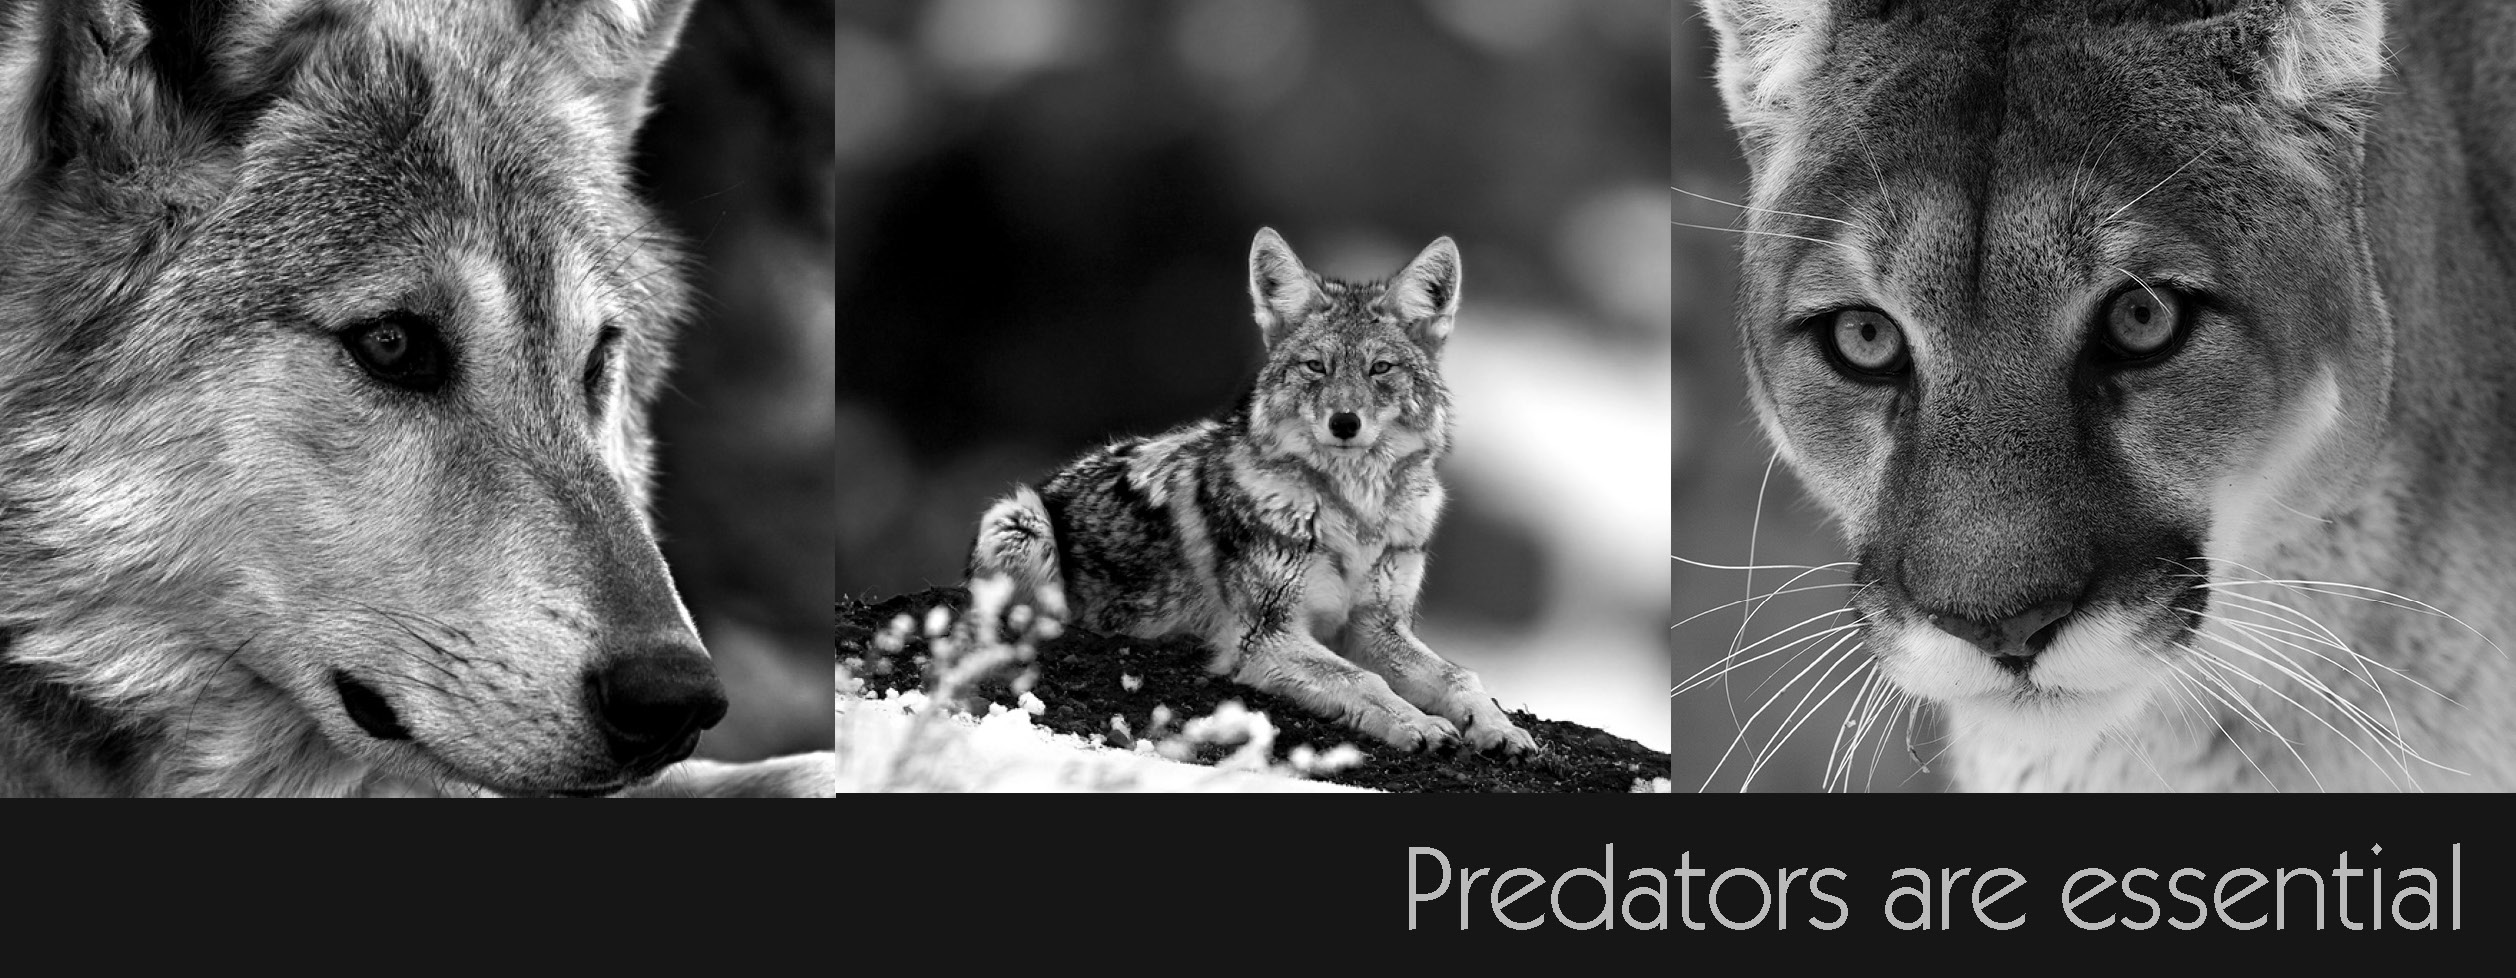 Predator Defense - a national nonprofit helping people & wildlife coexist  since 1990